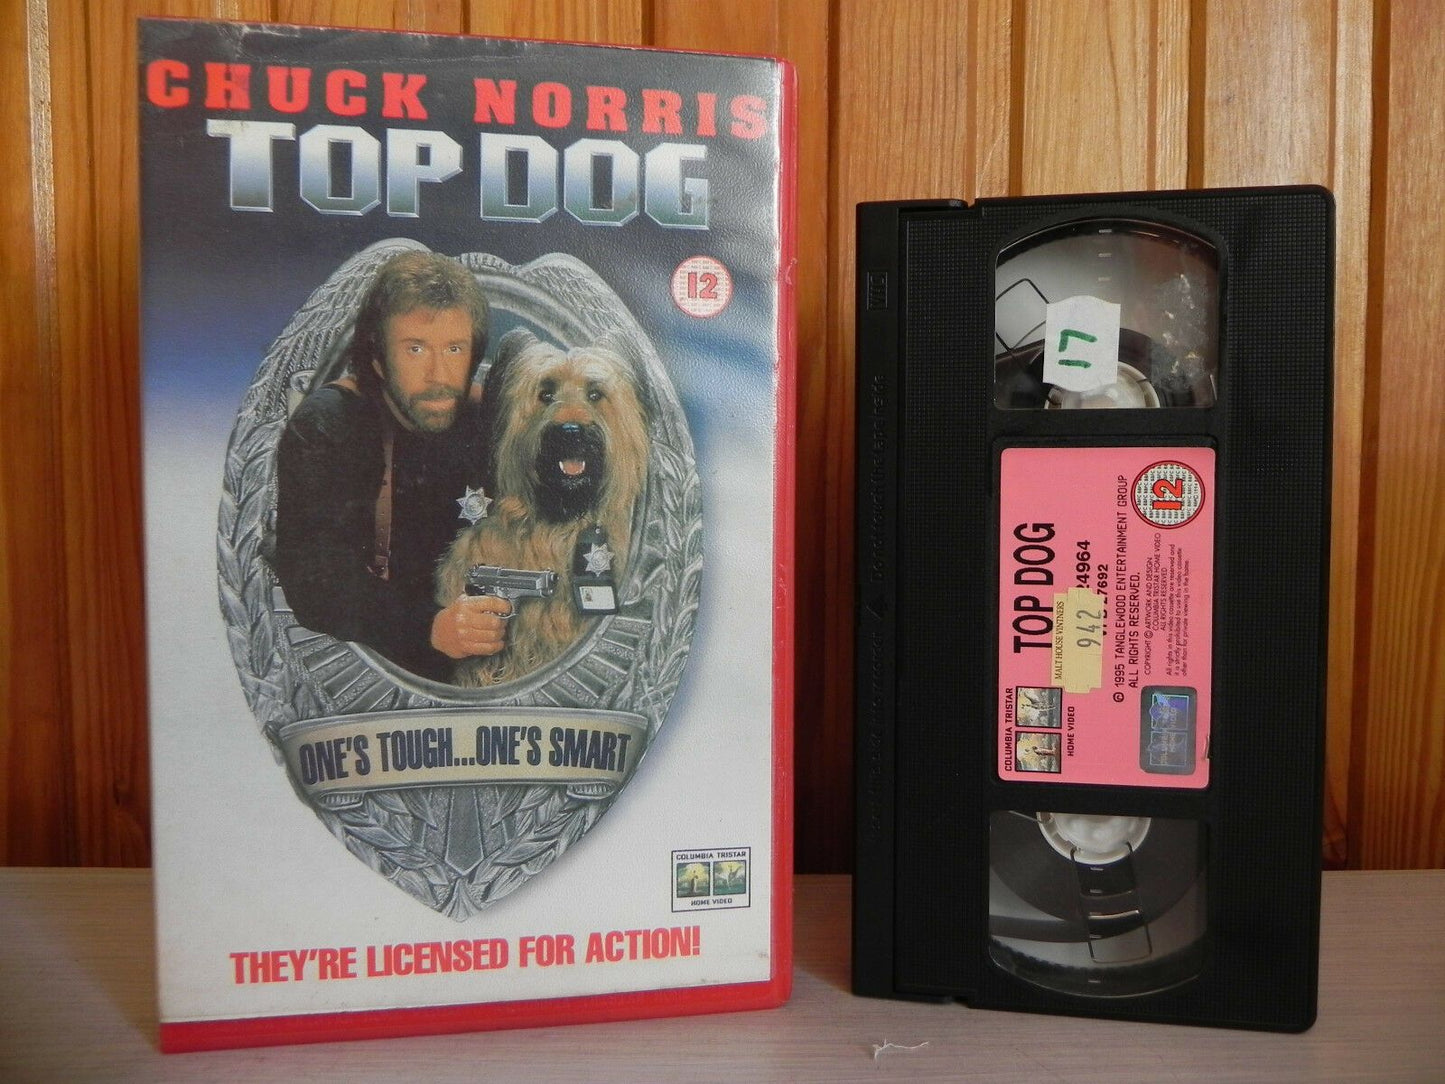 Top Dog - Action Adventure - Explosive - Original Chuck Norris - Big-Box - VHS-